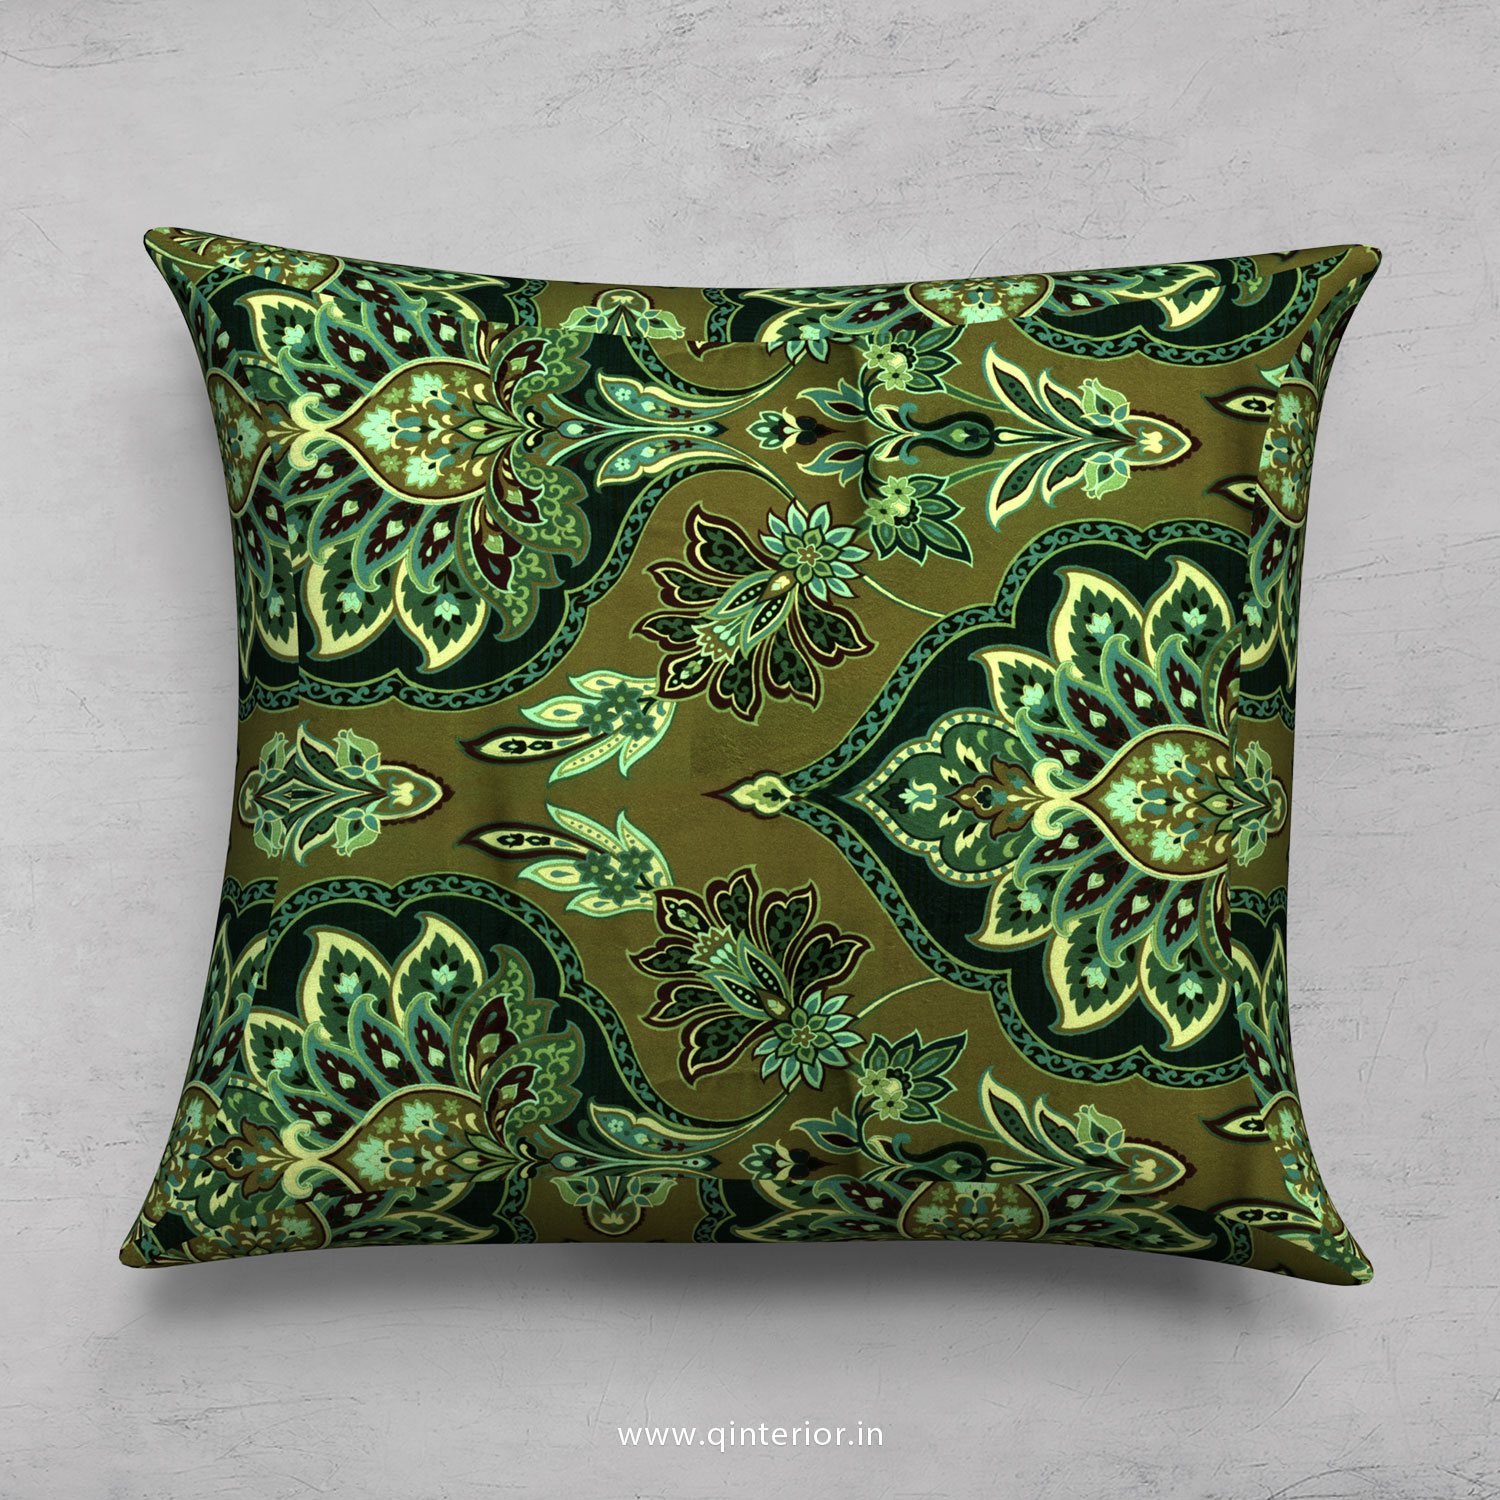 Cushion With Cushion Cover in Royal Velvet- CUS001 RV02